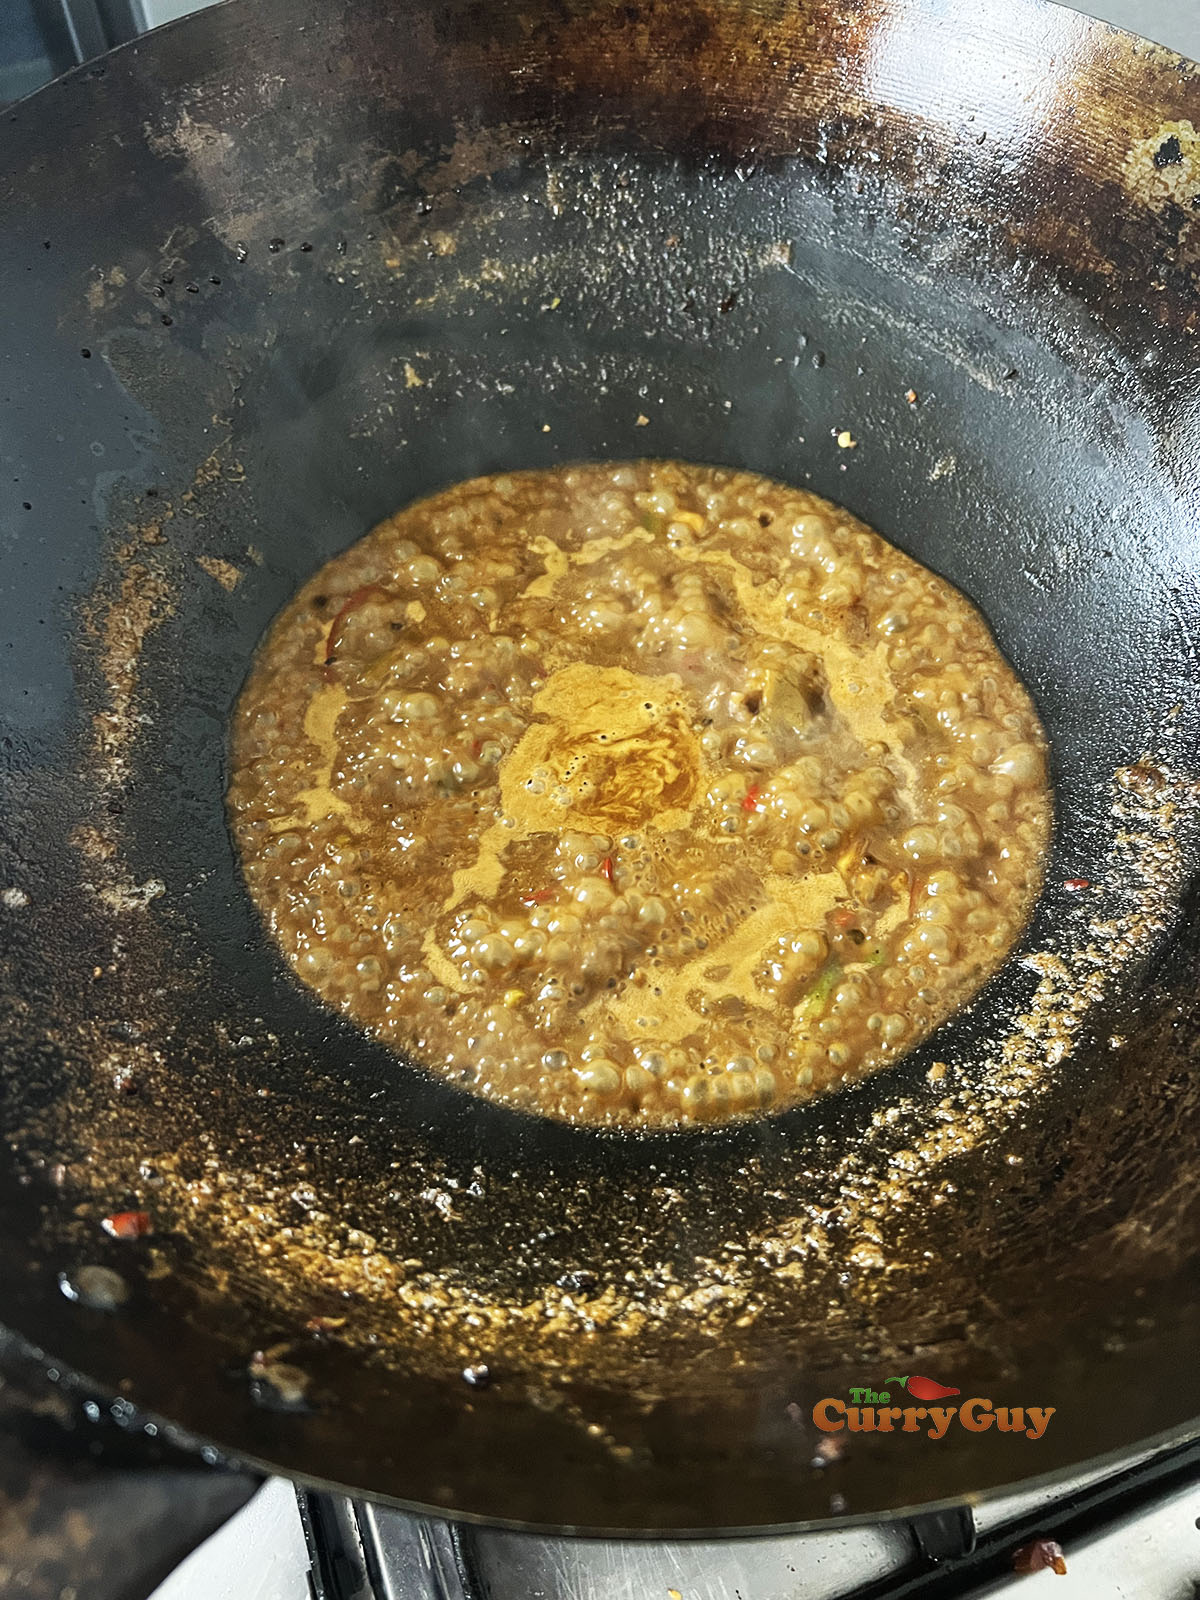 Adding remaining sauce ingredients to the wok